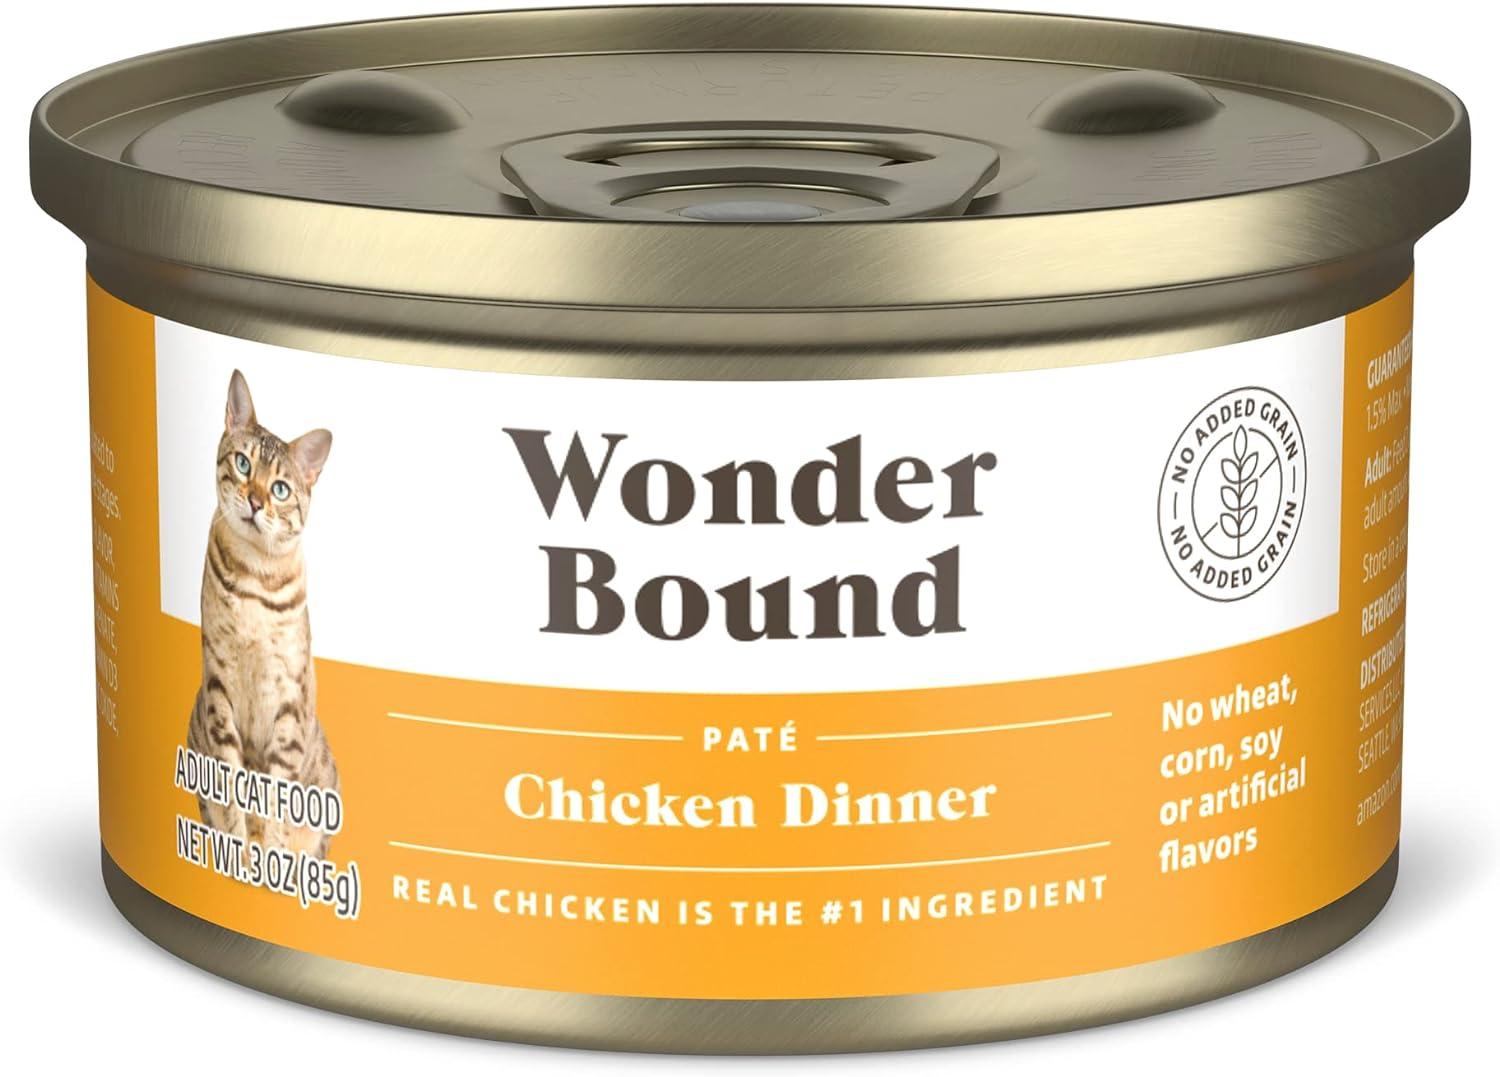 Wonder Bound Wet Cat Food 24 Pack for $12.37